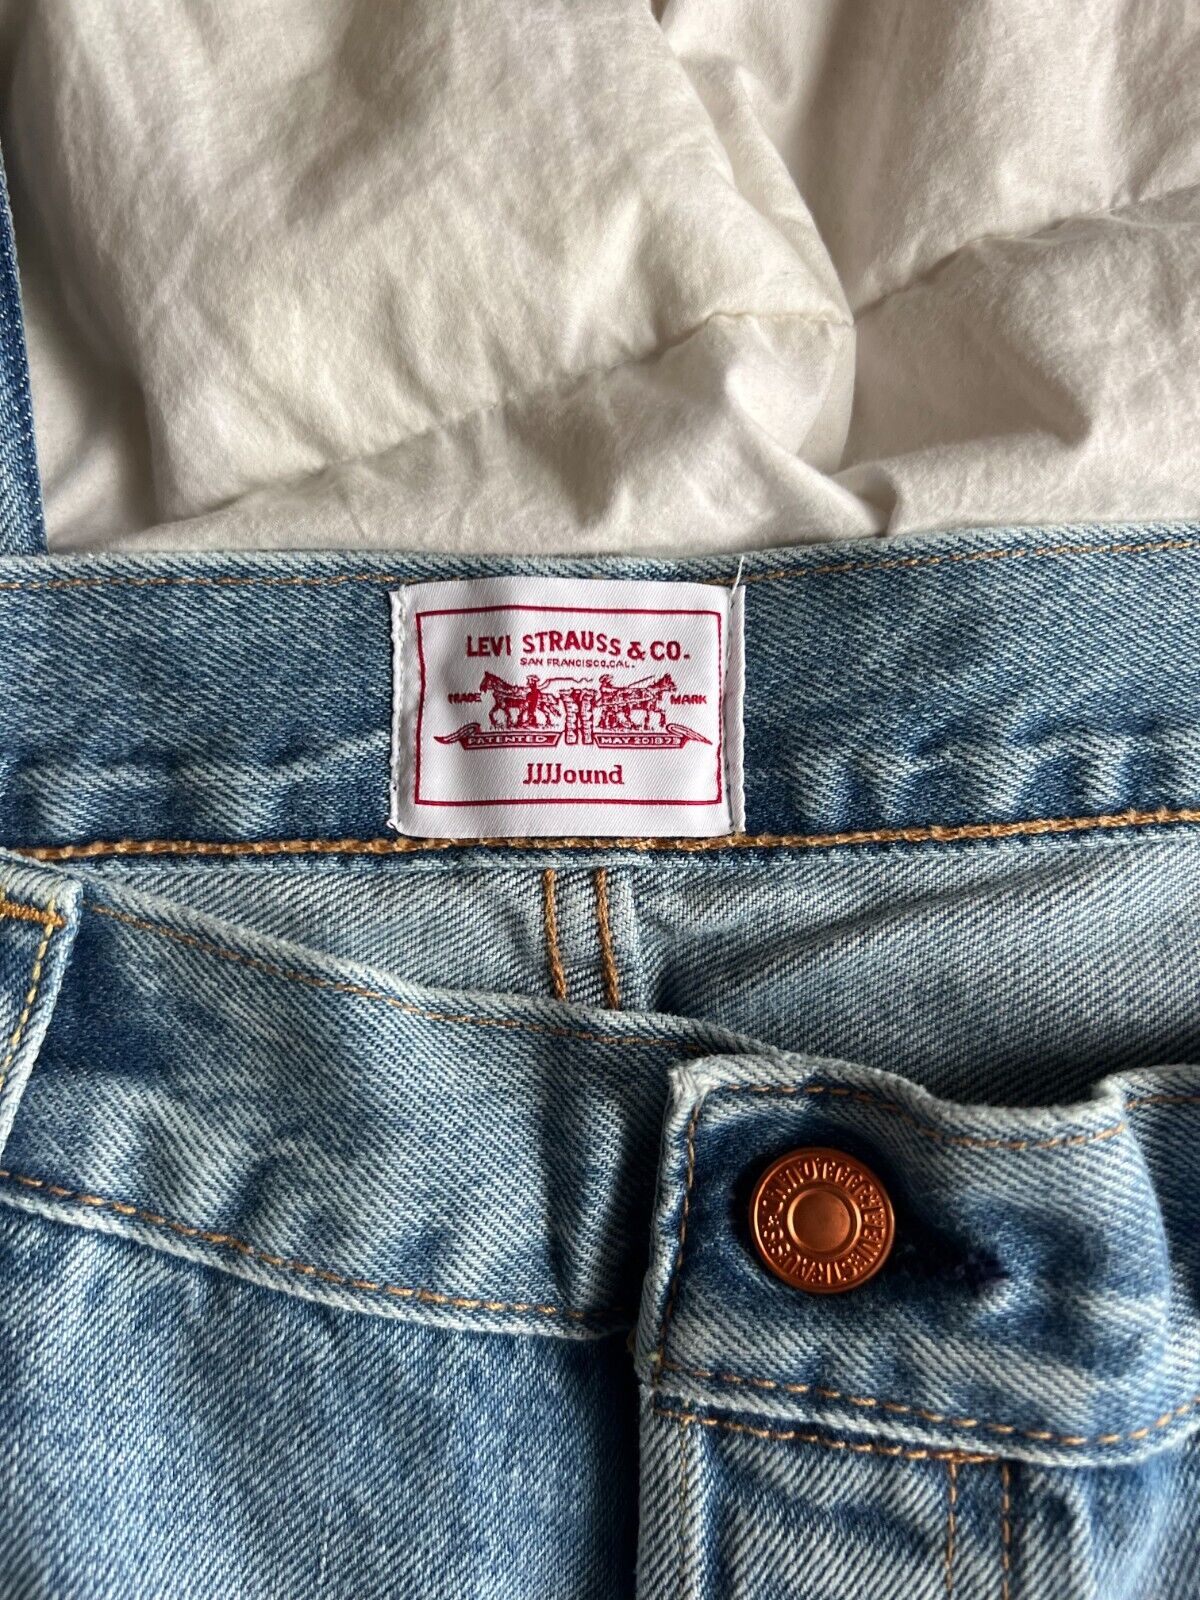 JJJJound x Levi's 501 Denim Jeans - Size 36x32 - Brand New Men's